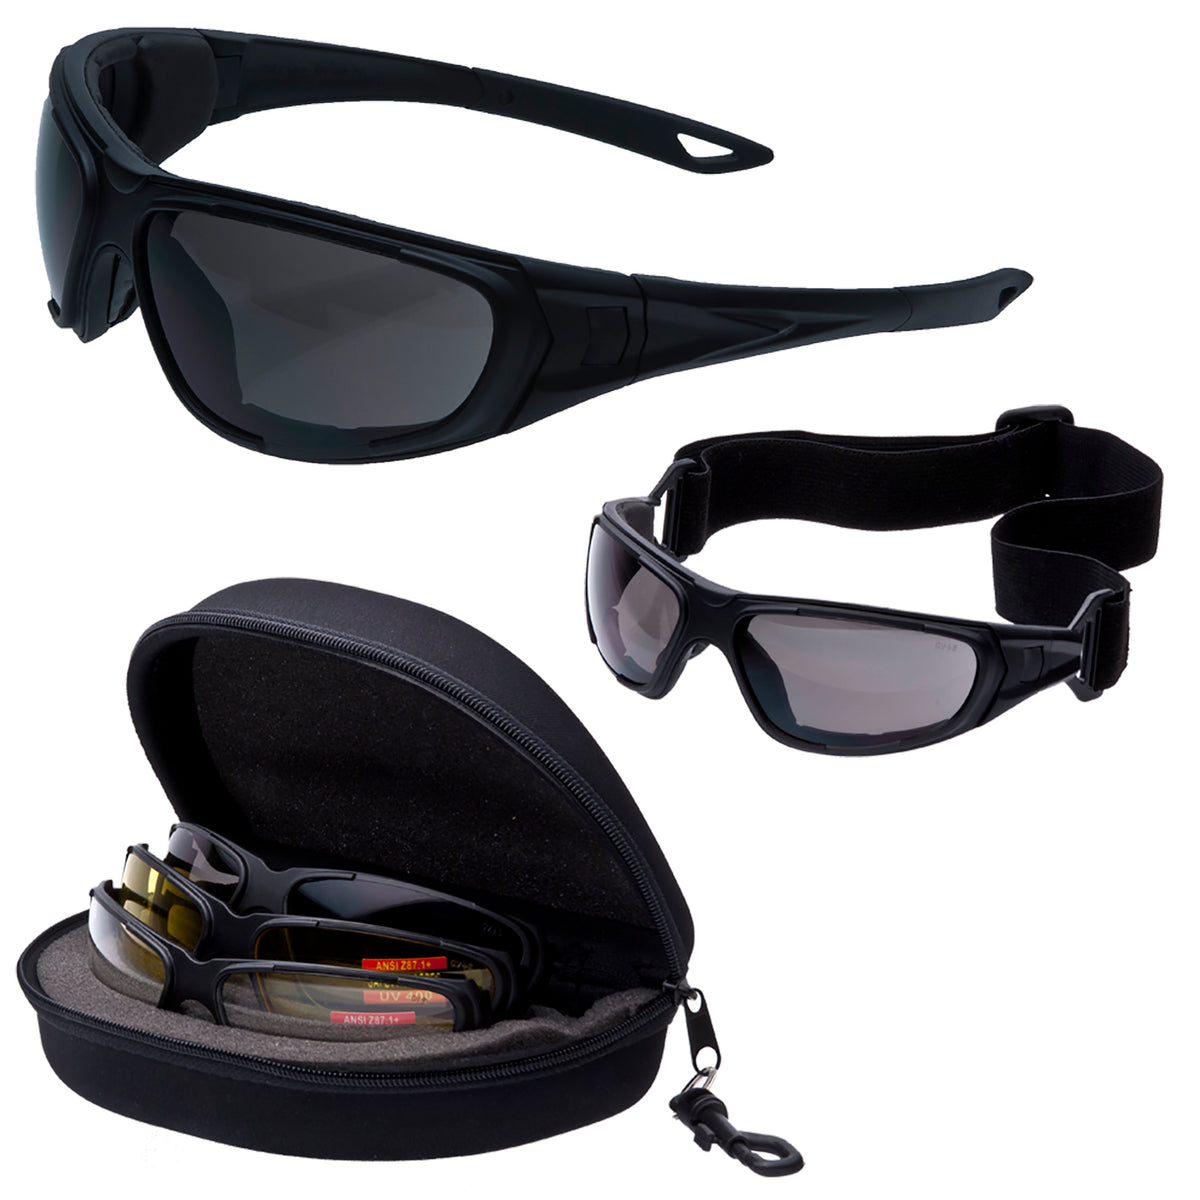 Typhoon Sunglasses Interchangeable Lenses Convert To Goggles